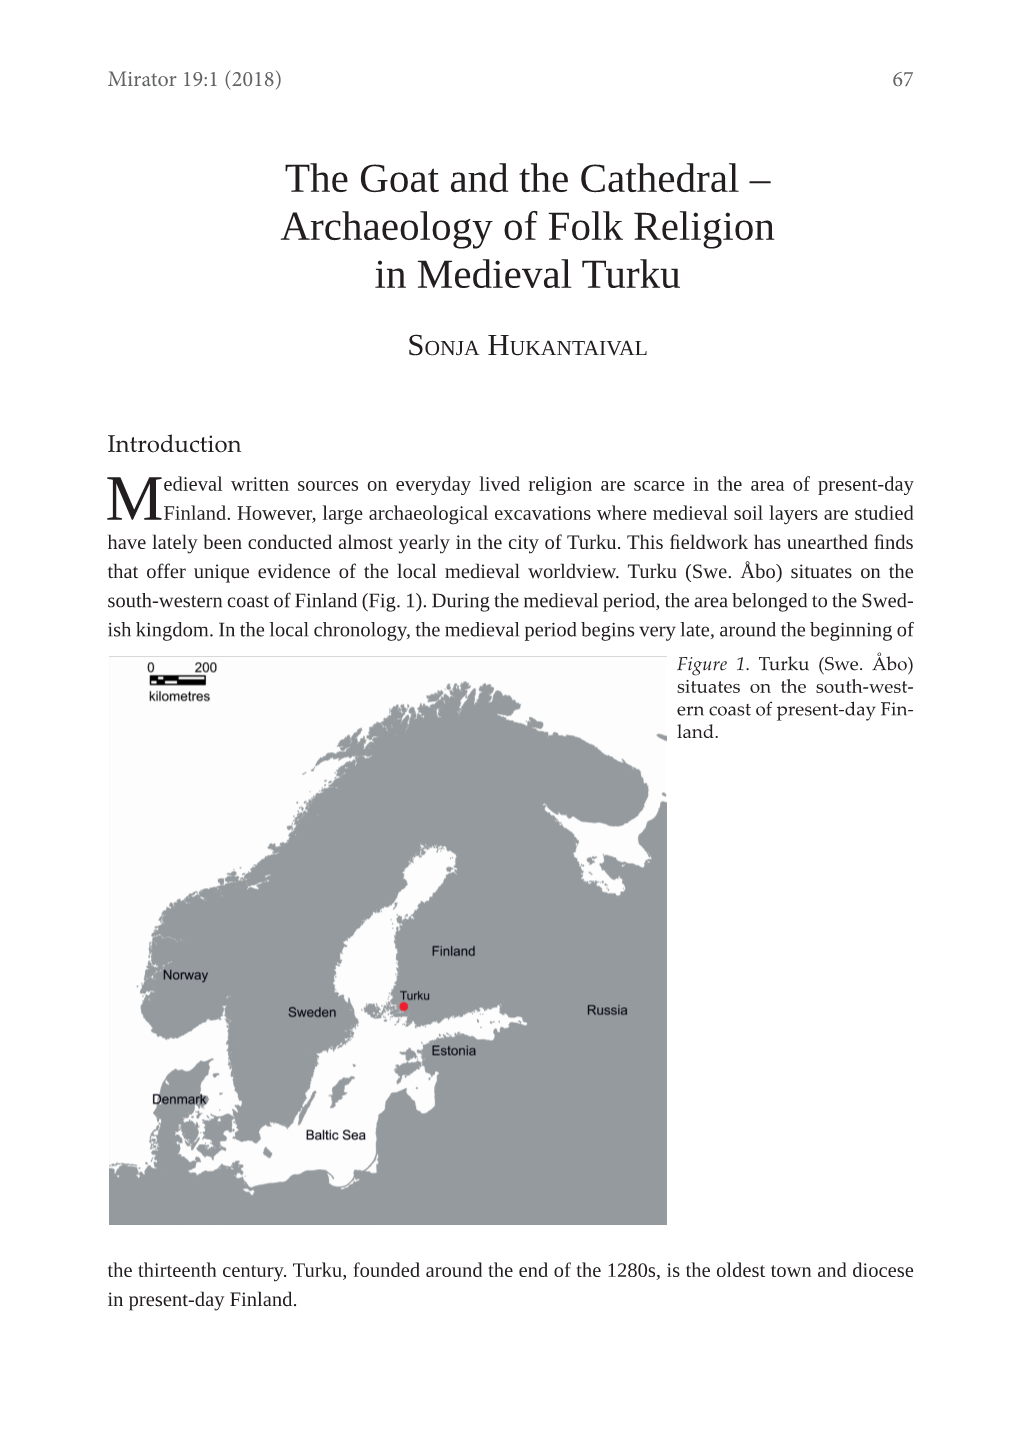 Archaeology of Folk Religion in Medieval Turku